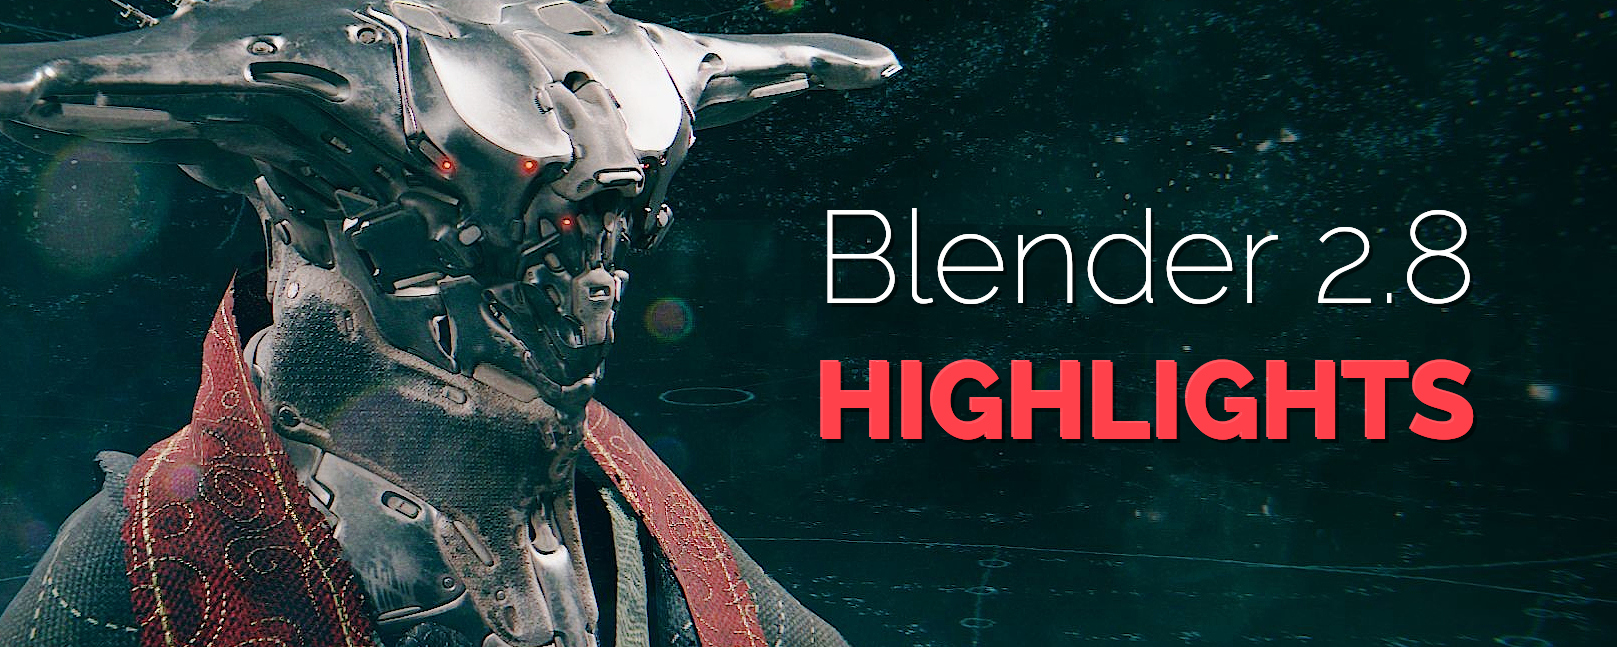 Blender 2.8 Highlights